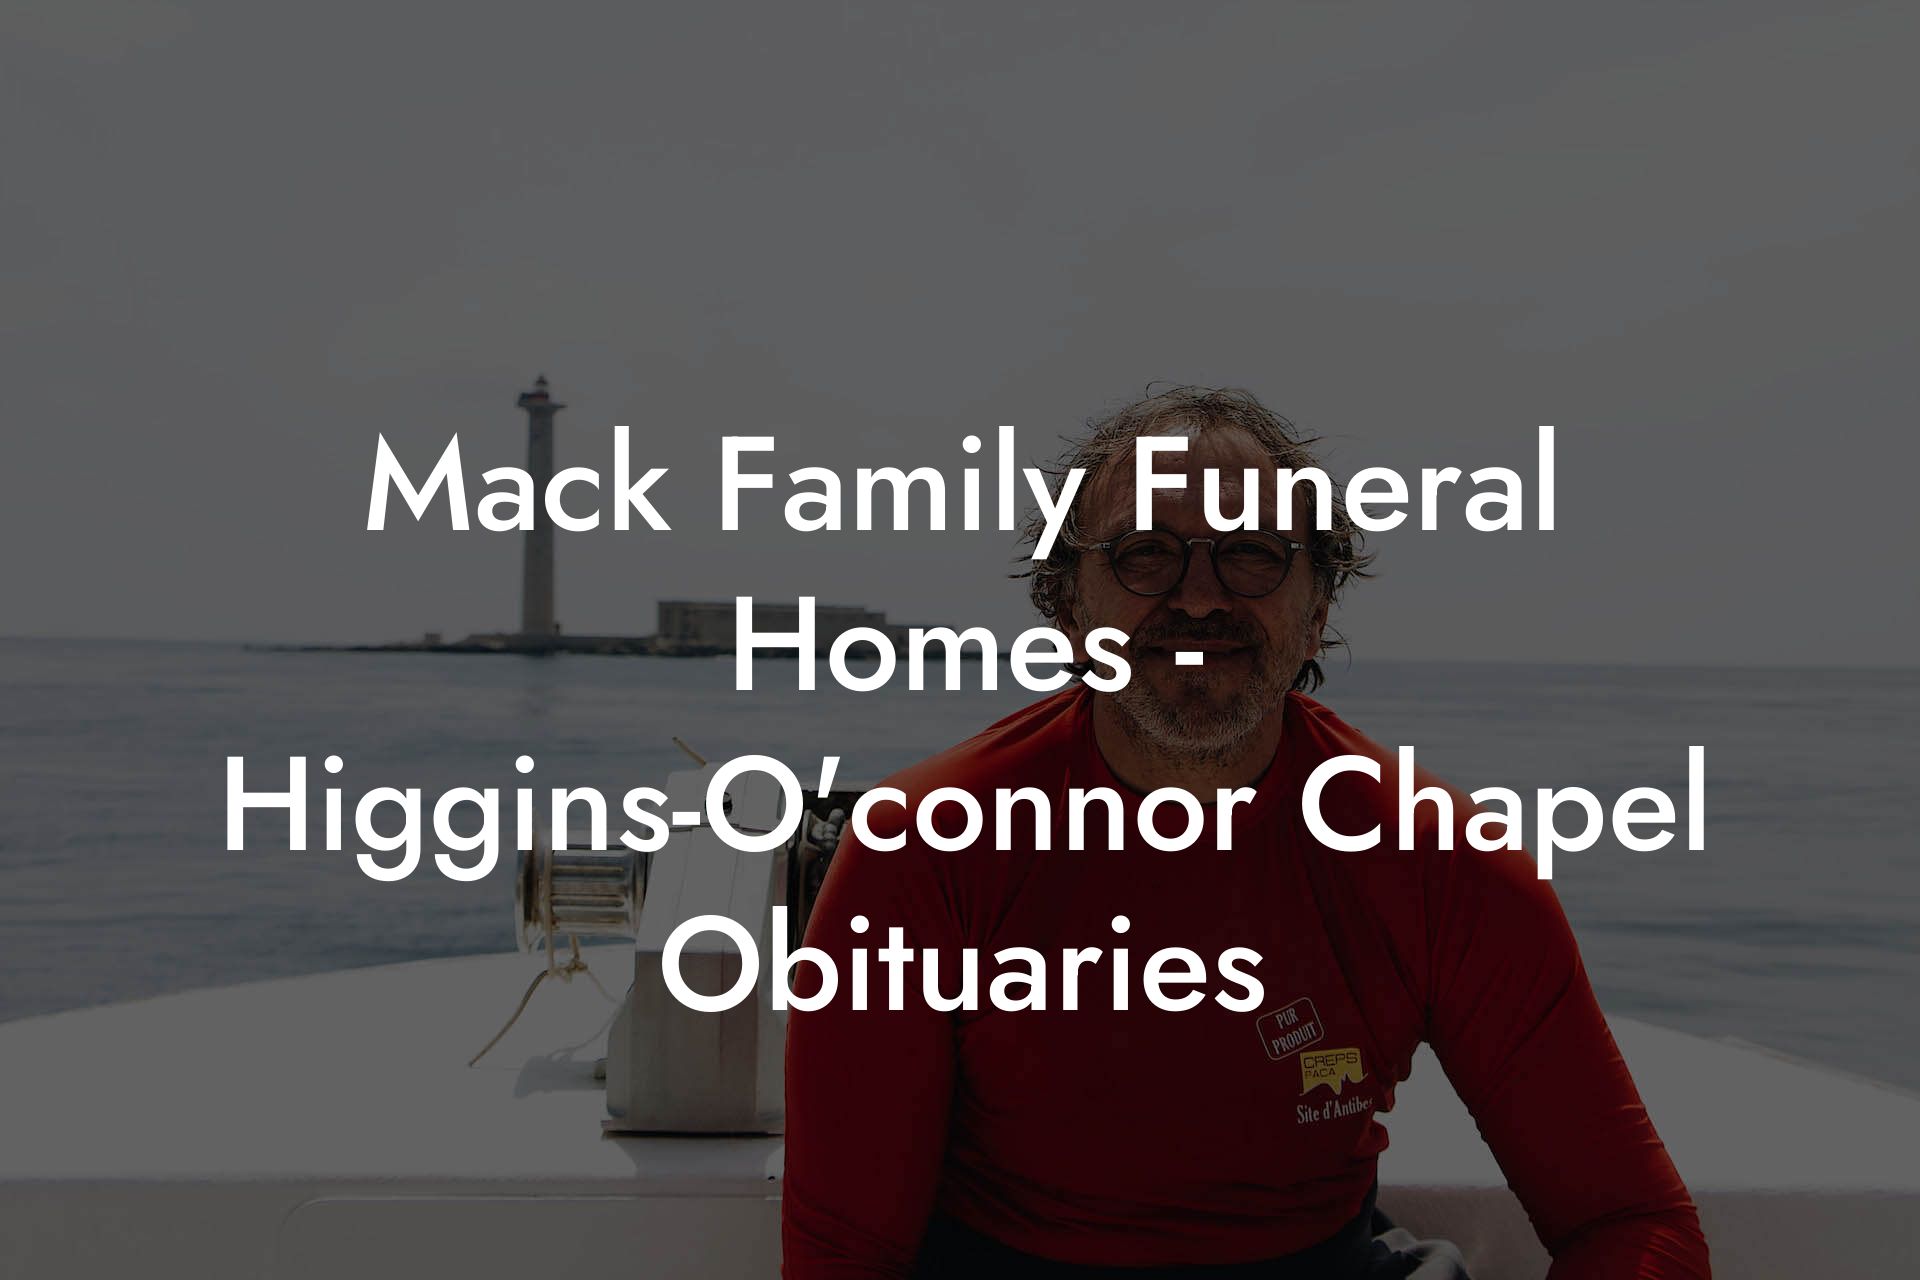 Mack Family Funeral Homes - Higgins-O'connor Chapel Obituaries